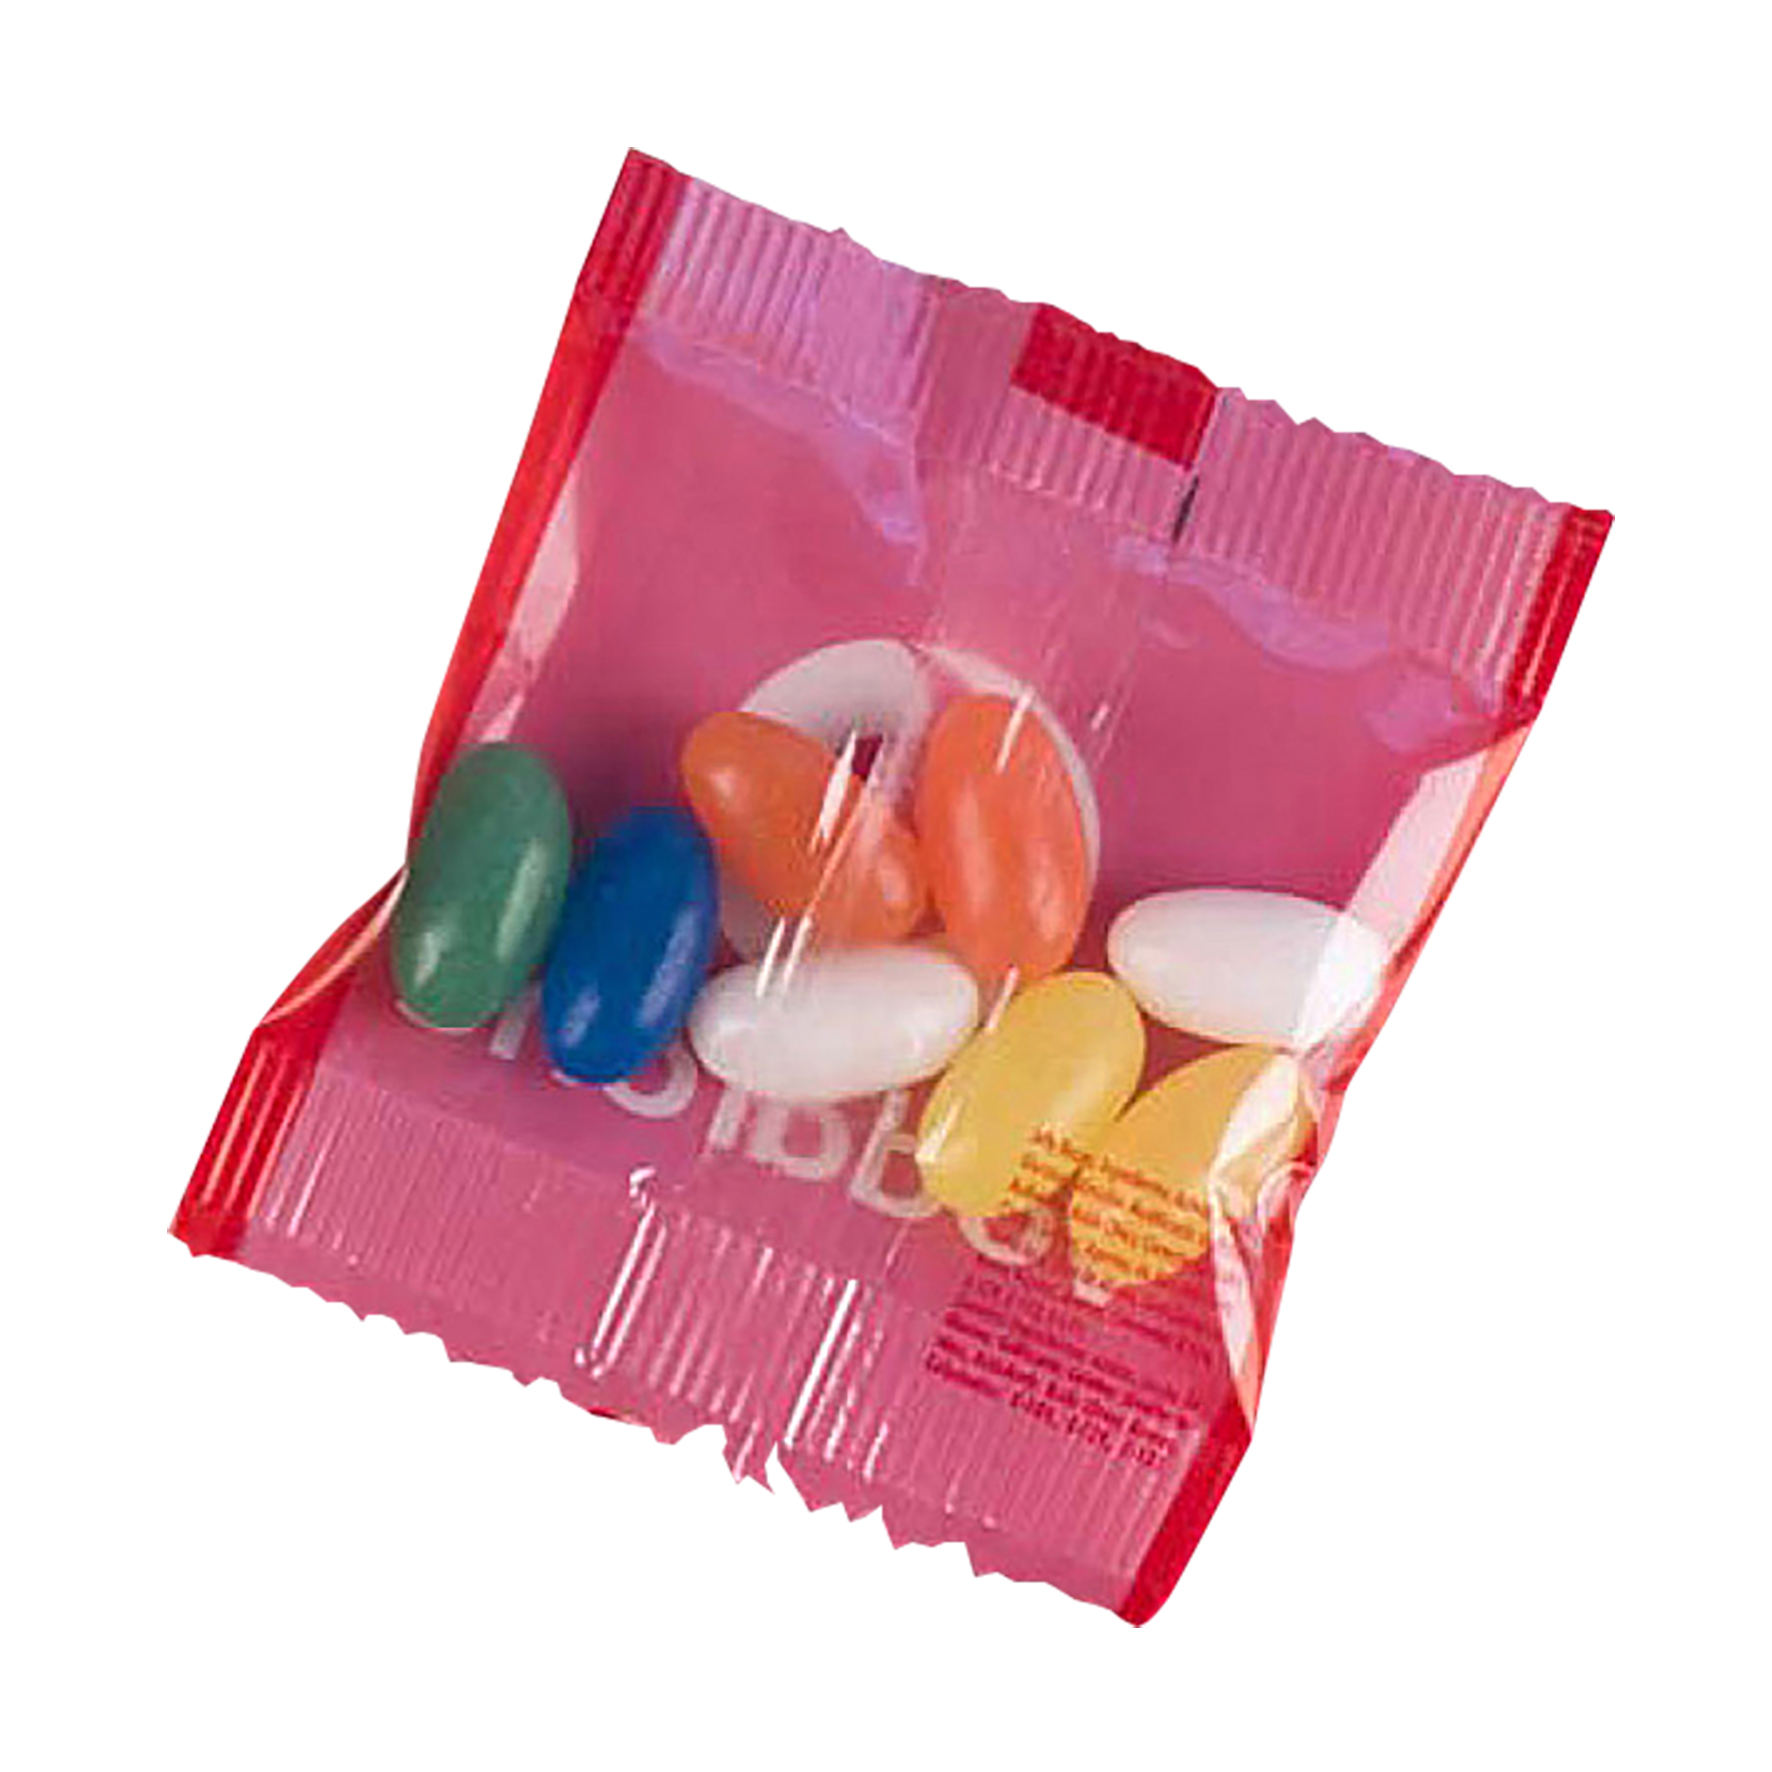 c 0070 00 2 - Fruit pastille bag (10g)